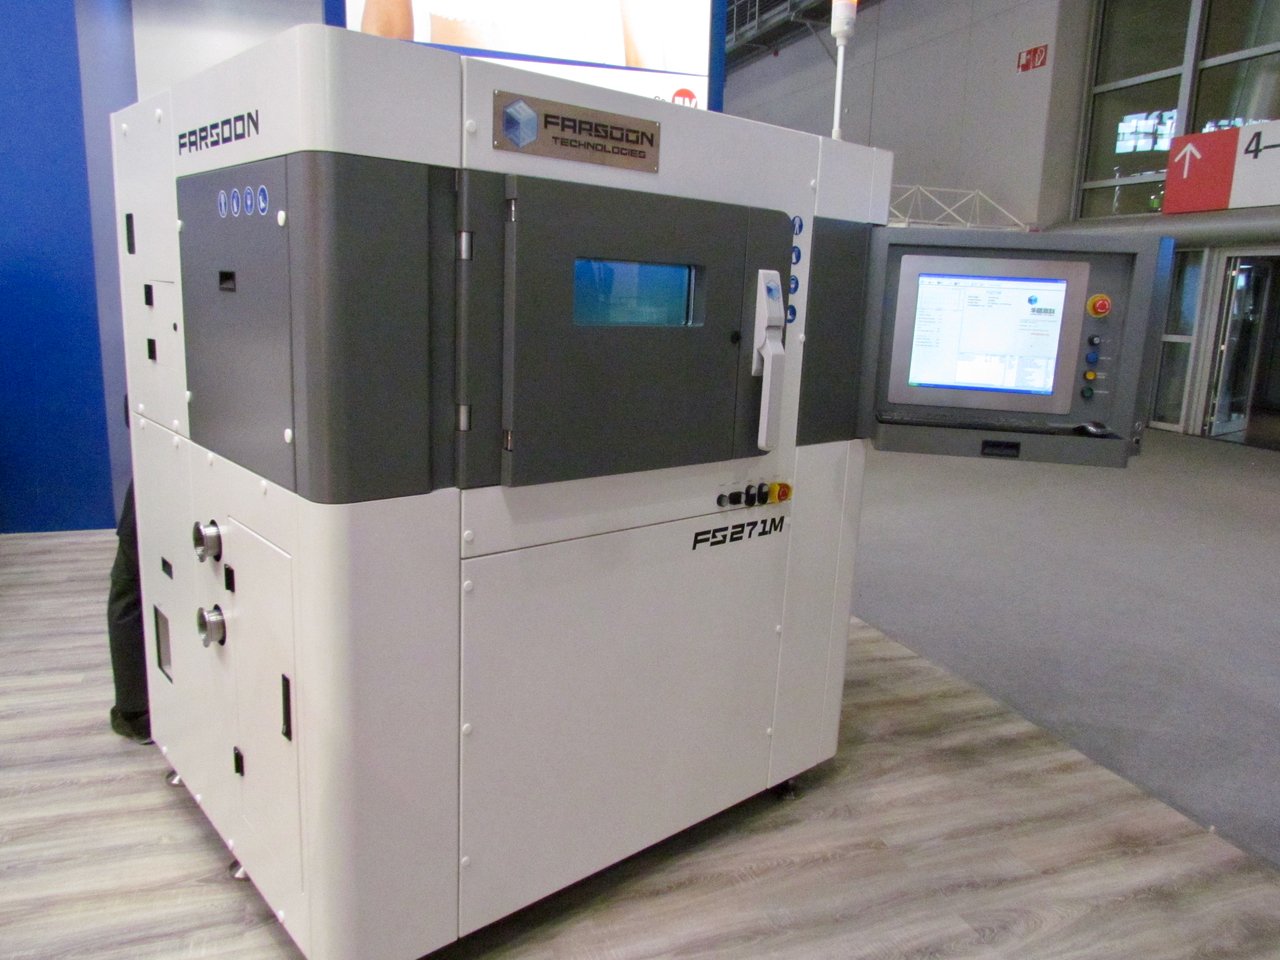  The Farsoon FS271M 3D metal printer 